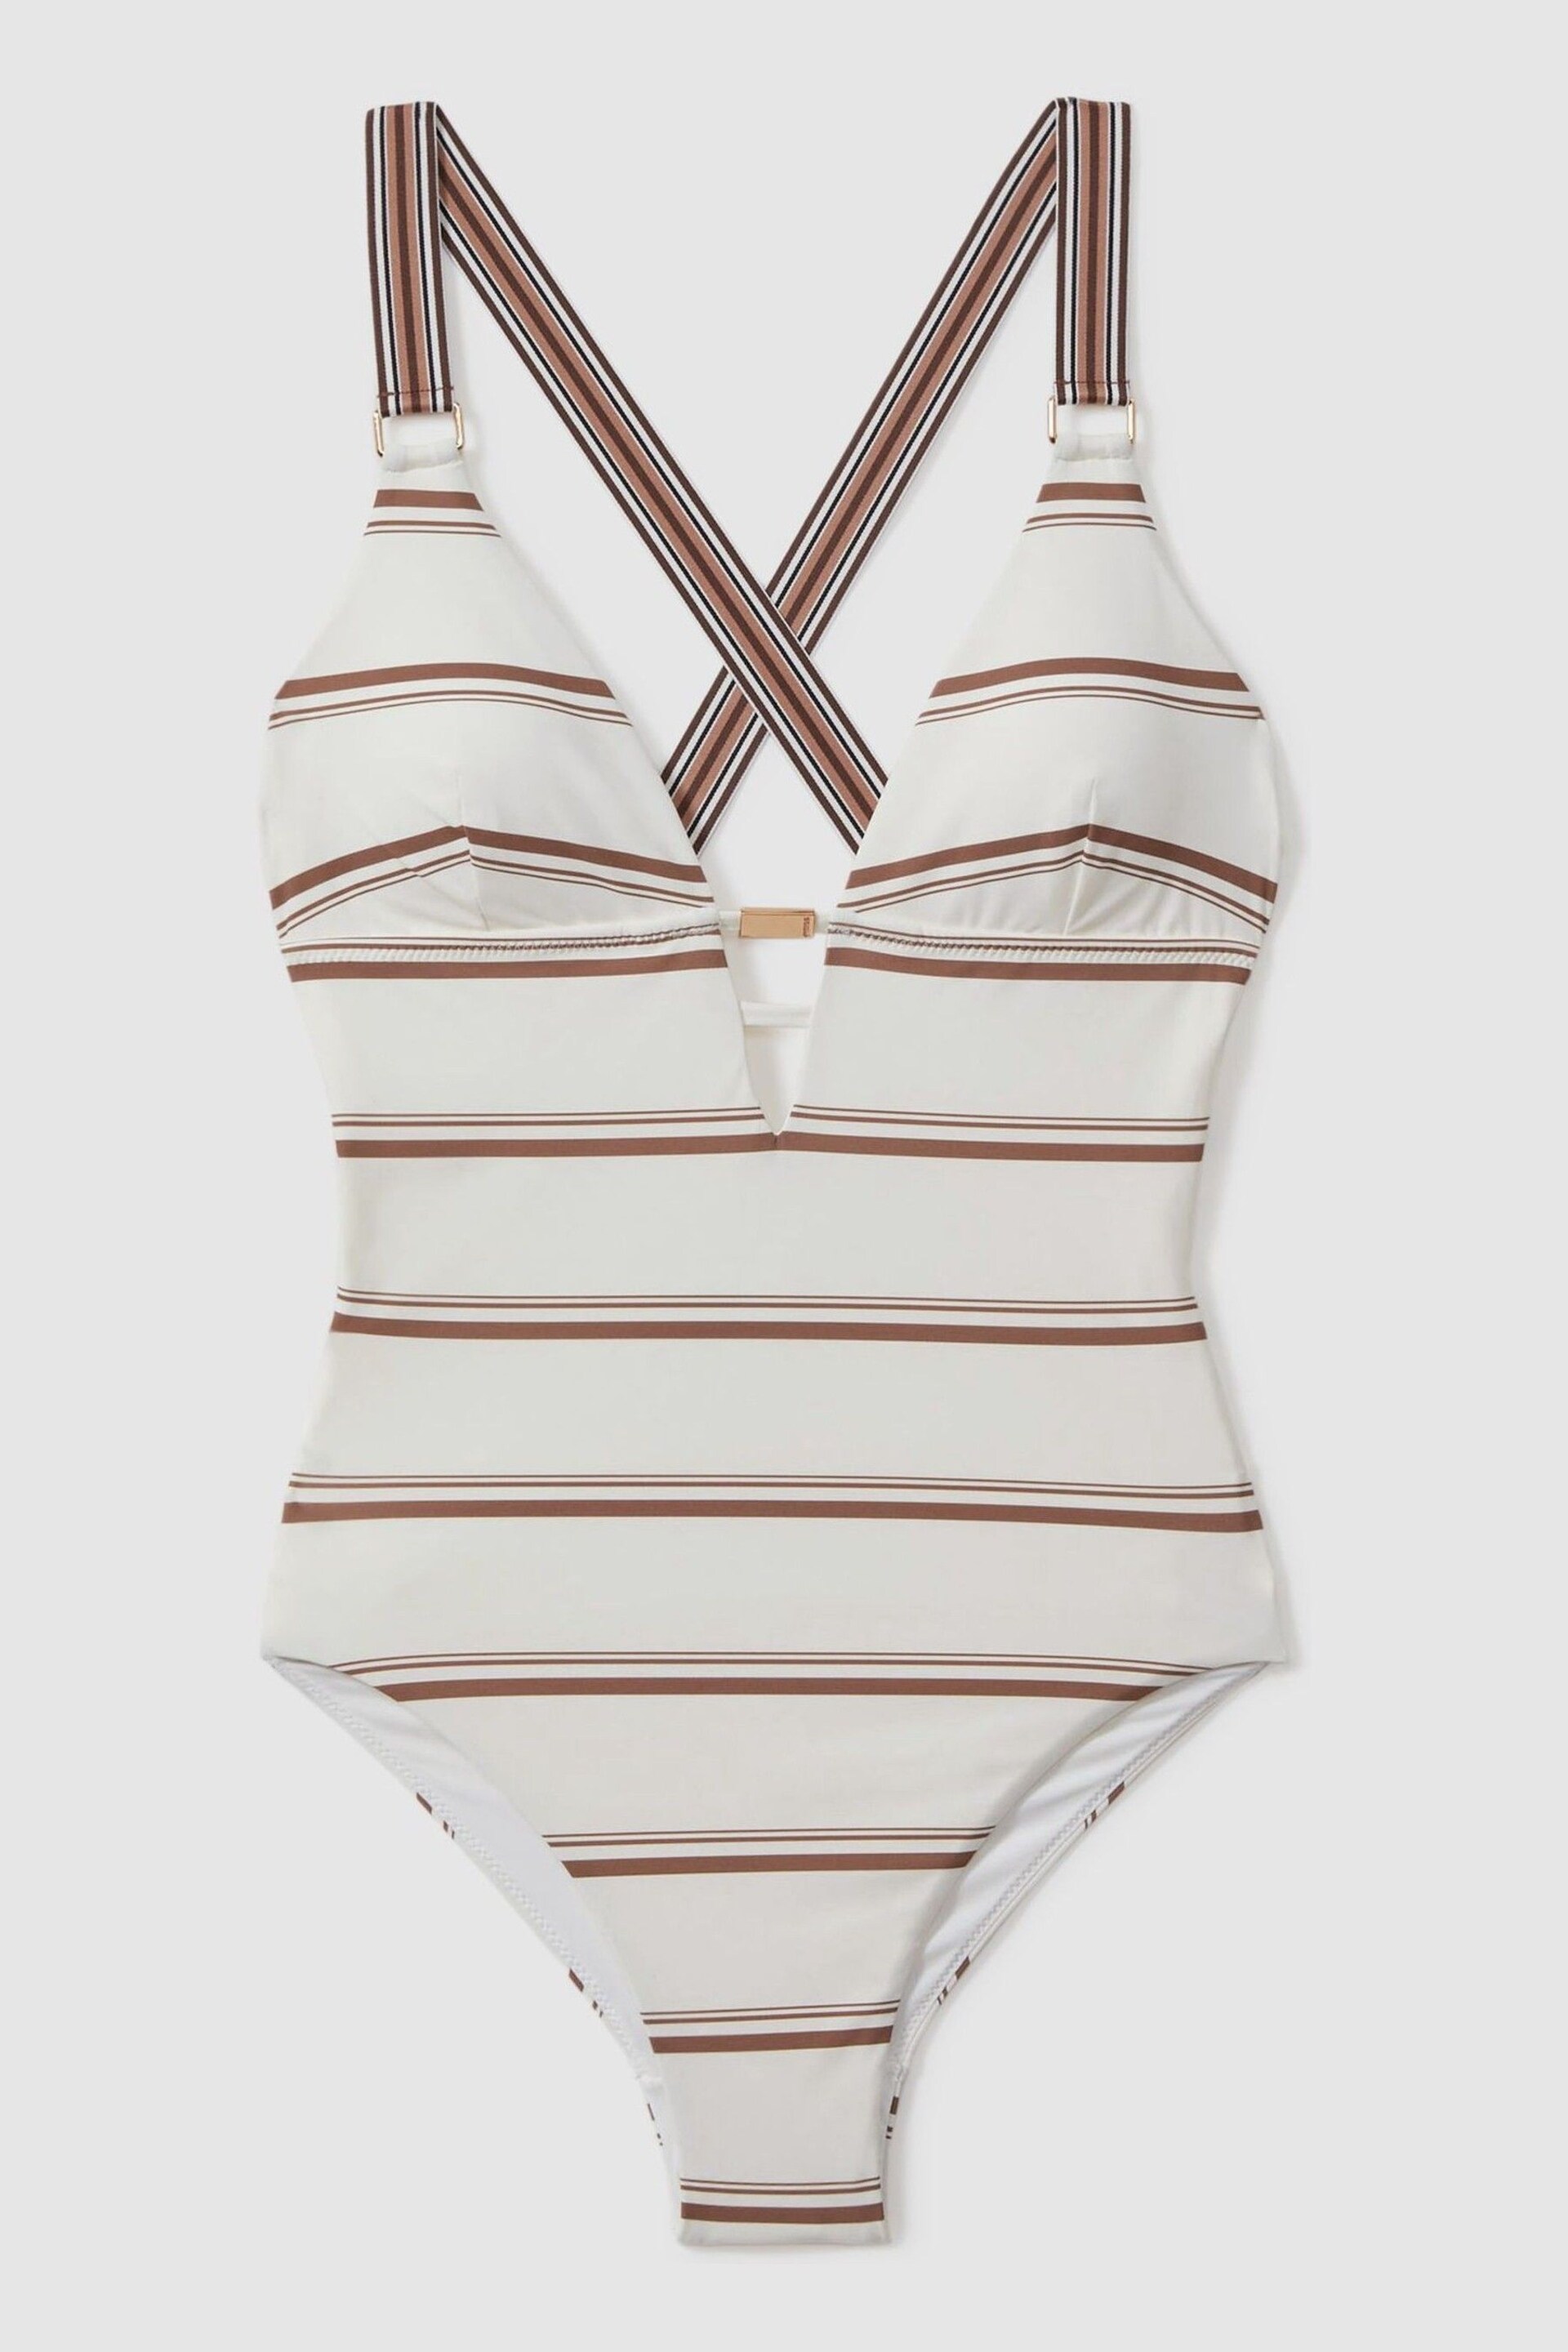 Reiss Cream/Brown Freda Striped Cross-Back Swimsuit - Image 2 of 4